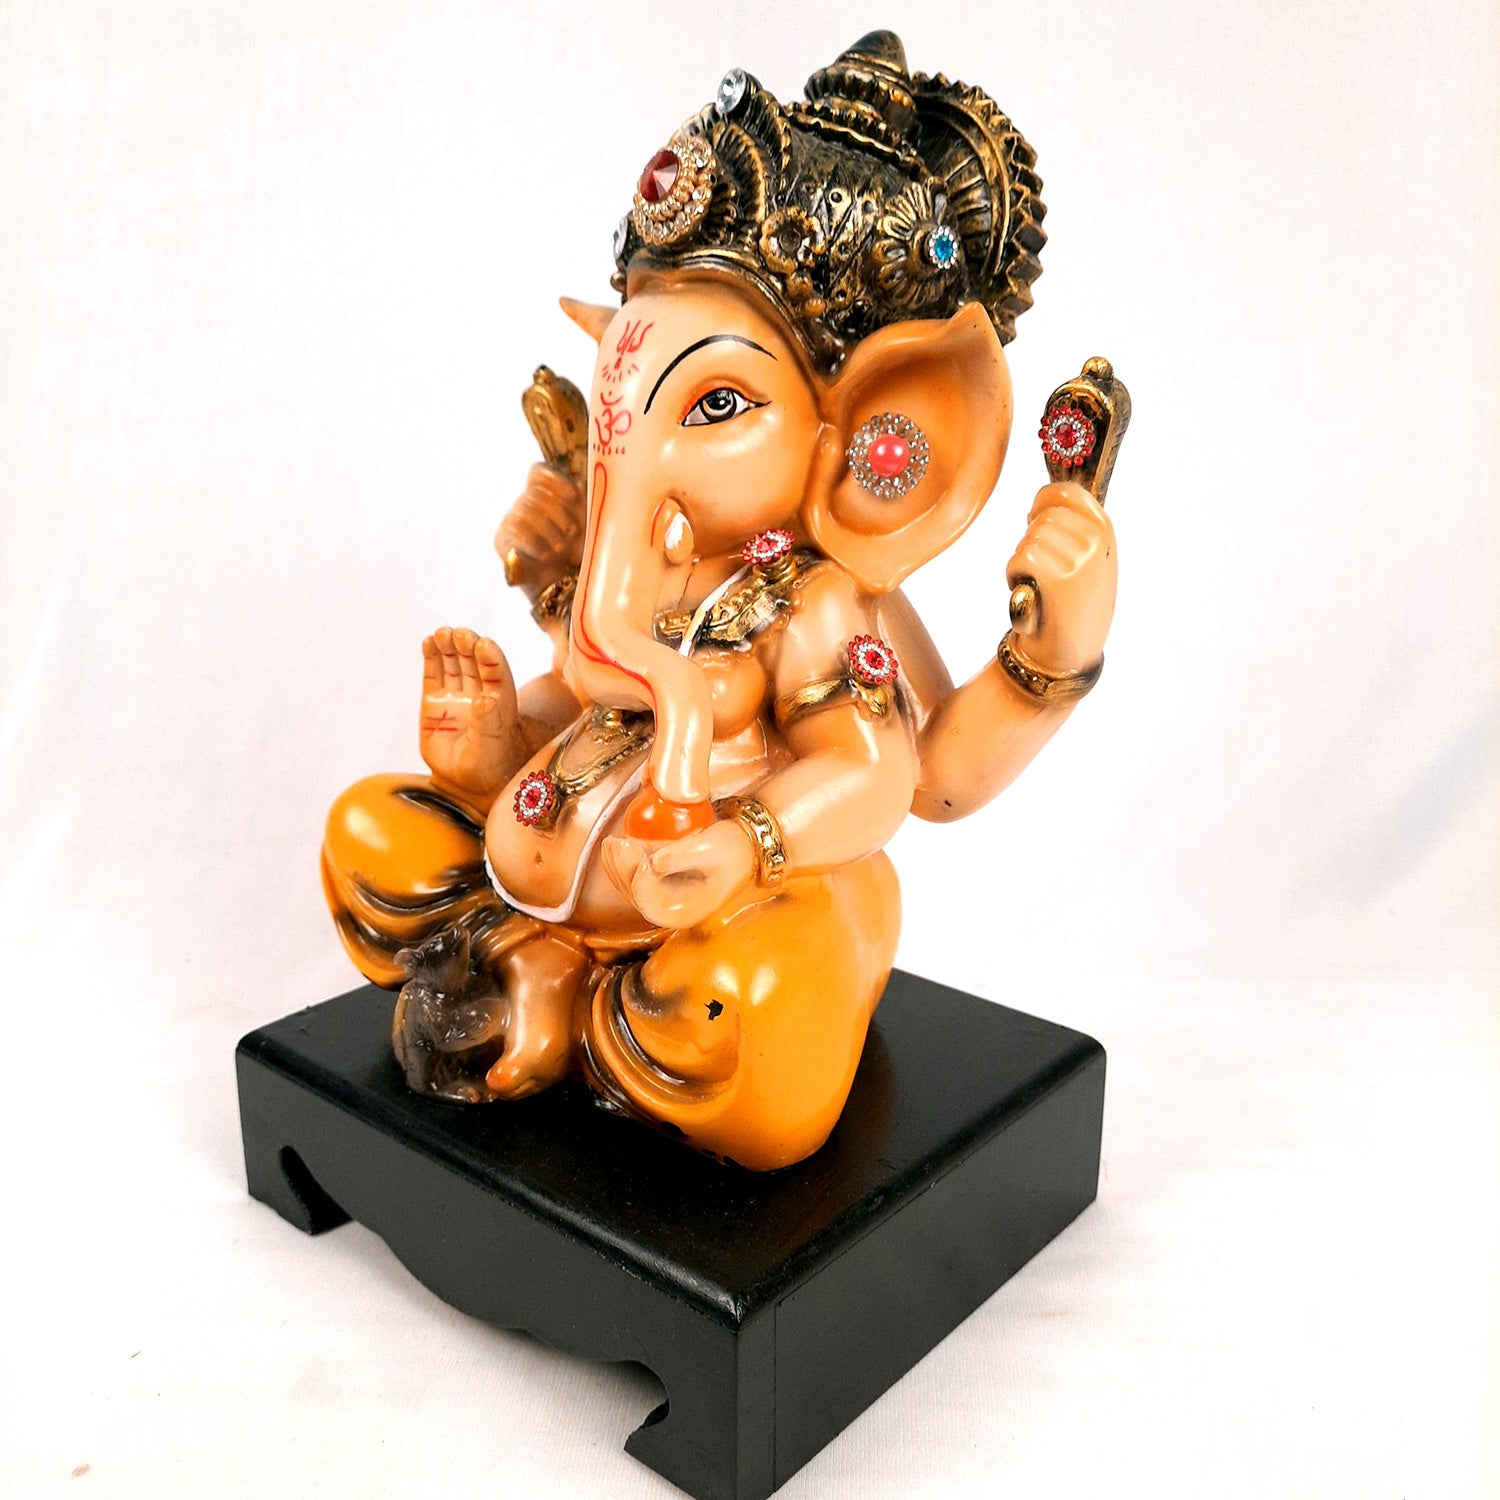 Ganesh Idol | Lord Ganesha Statue Murti - For Puja, Home & Entrance Living Room Decor & Gift - 11 Inch - Apkamart